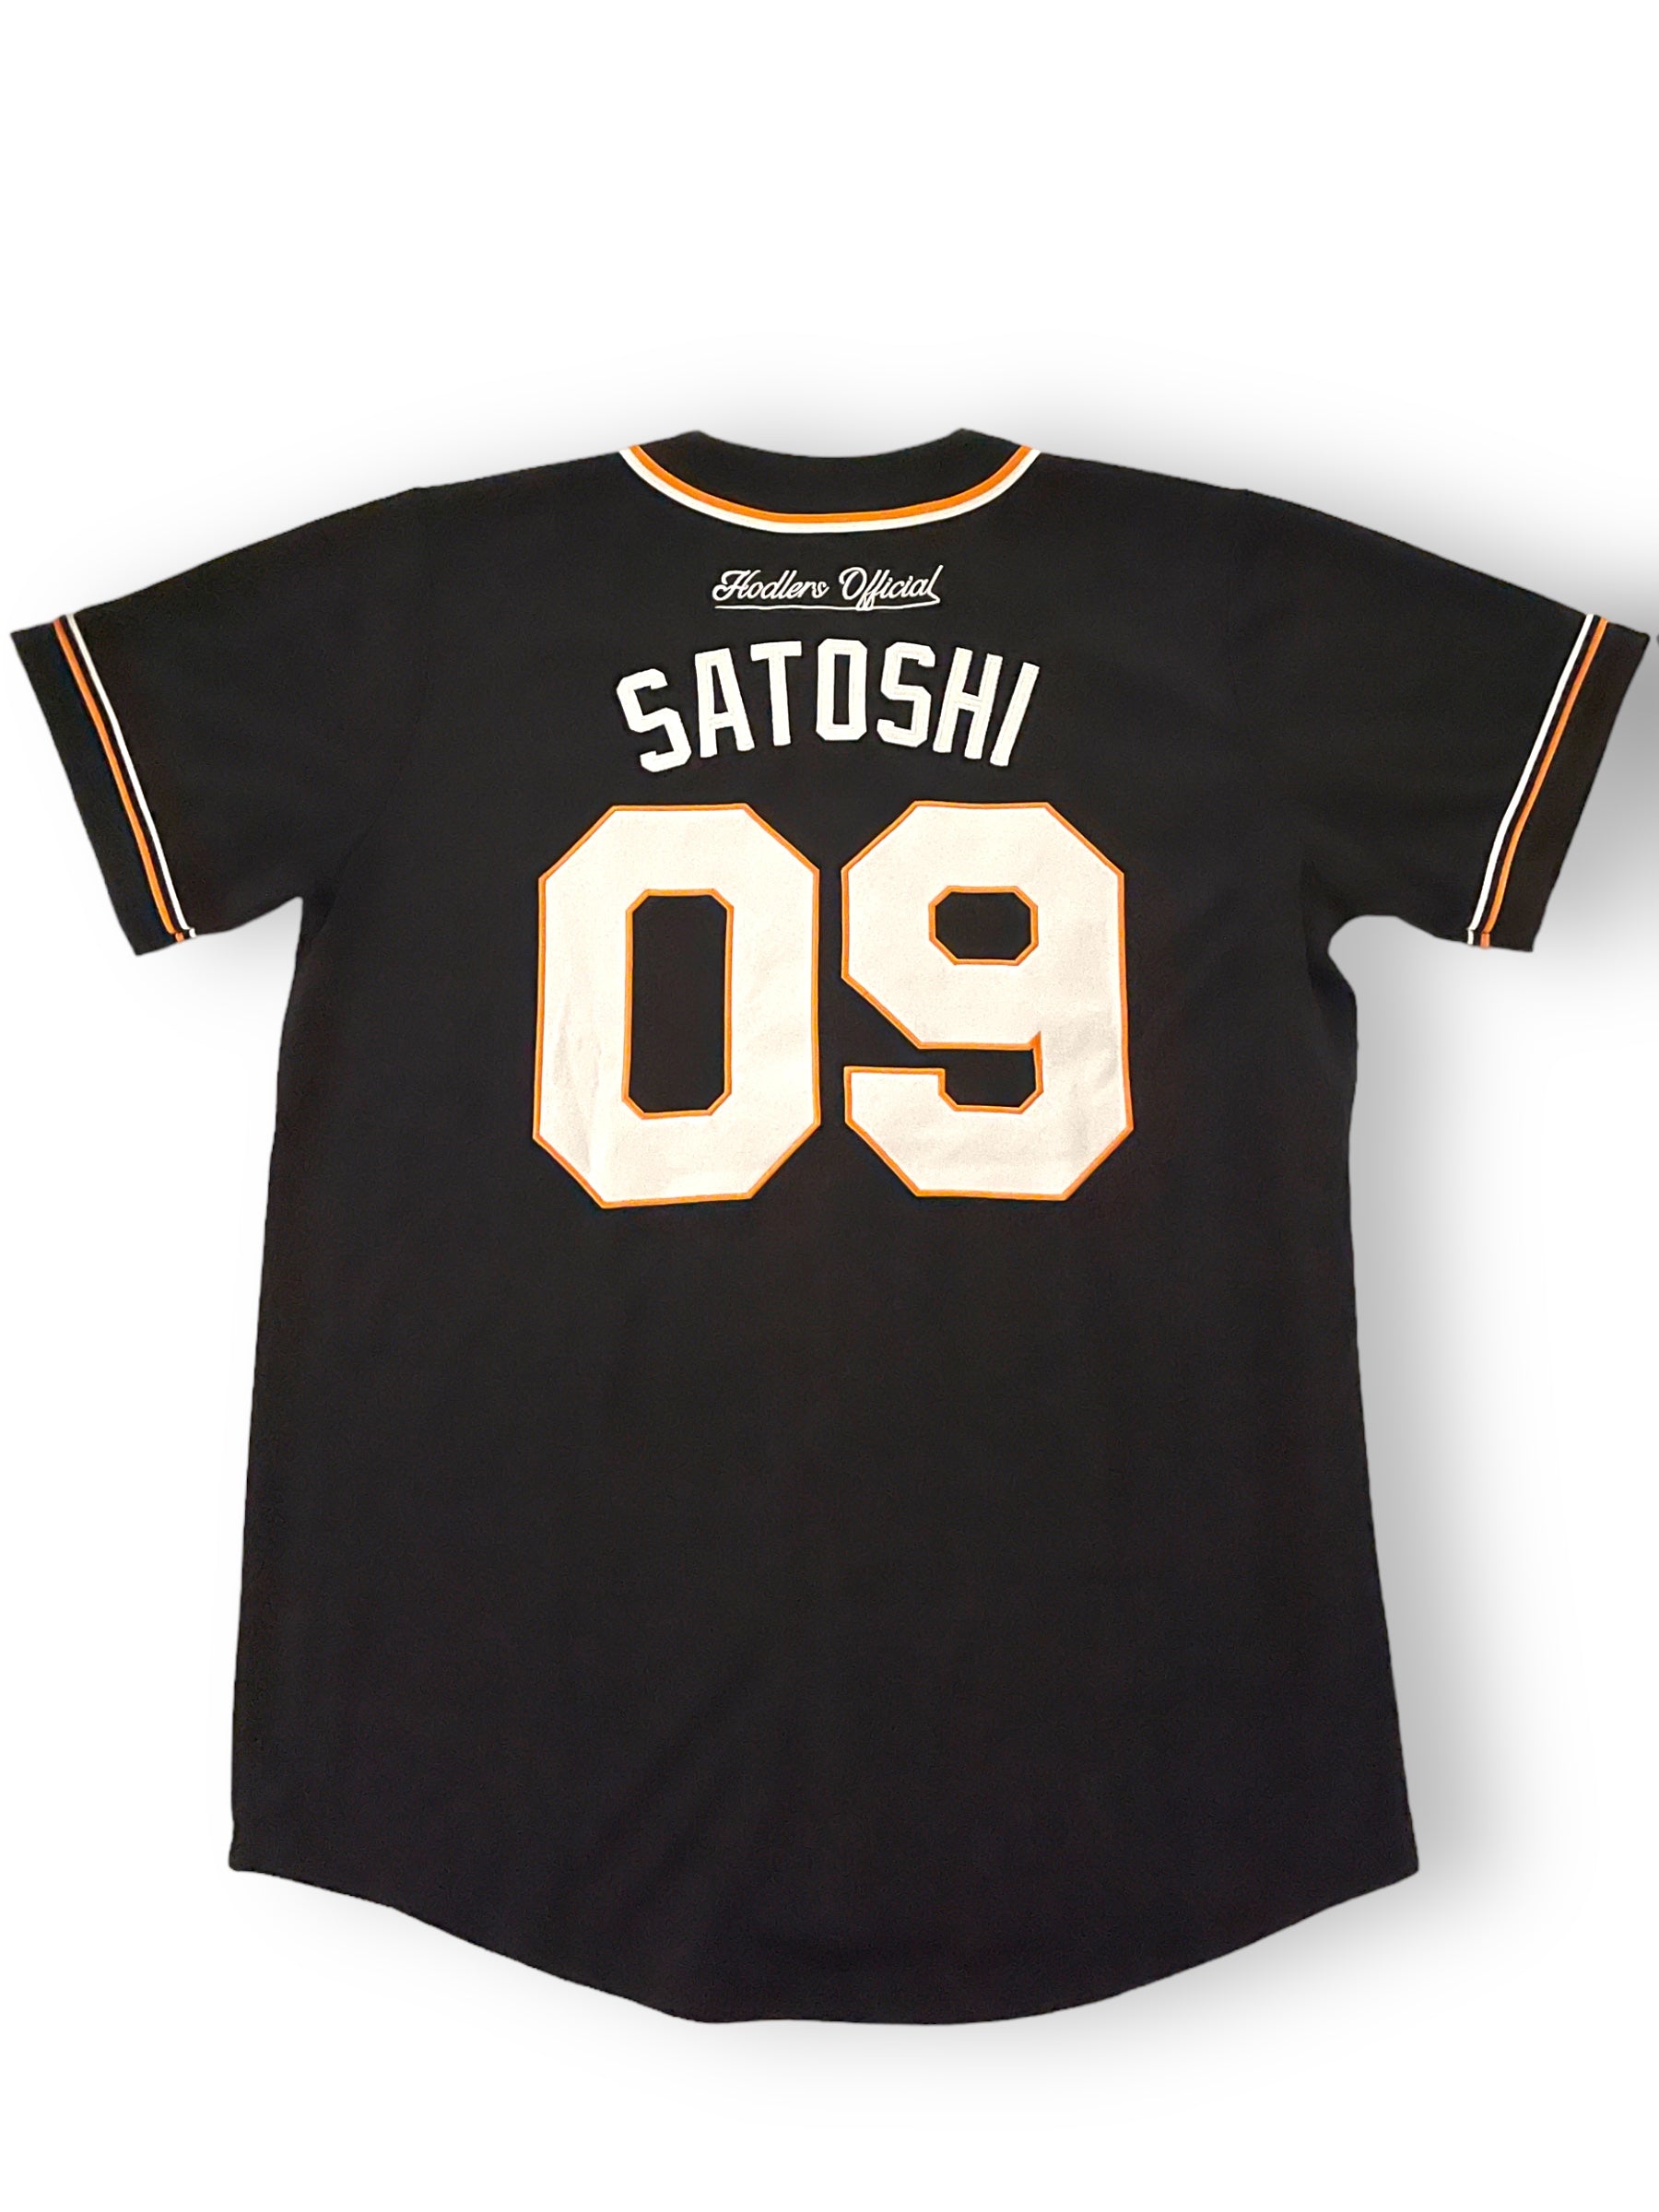 Team Bitcoin Baseball Jersey Black 09 Satoshi Nakamoto Hodlers Official